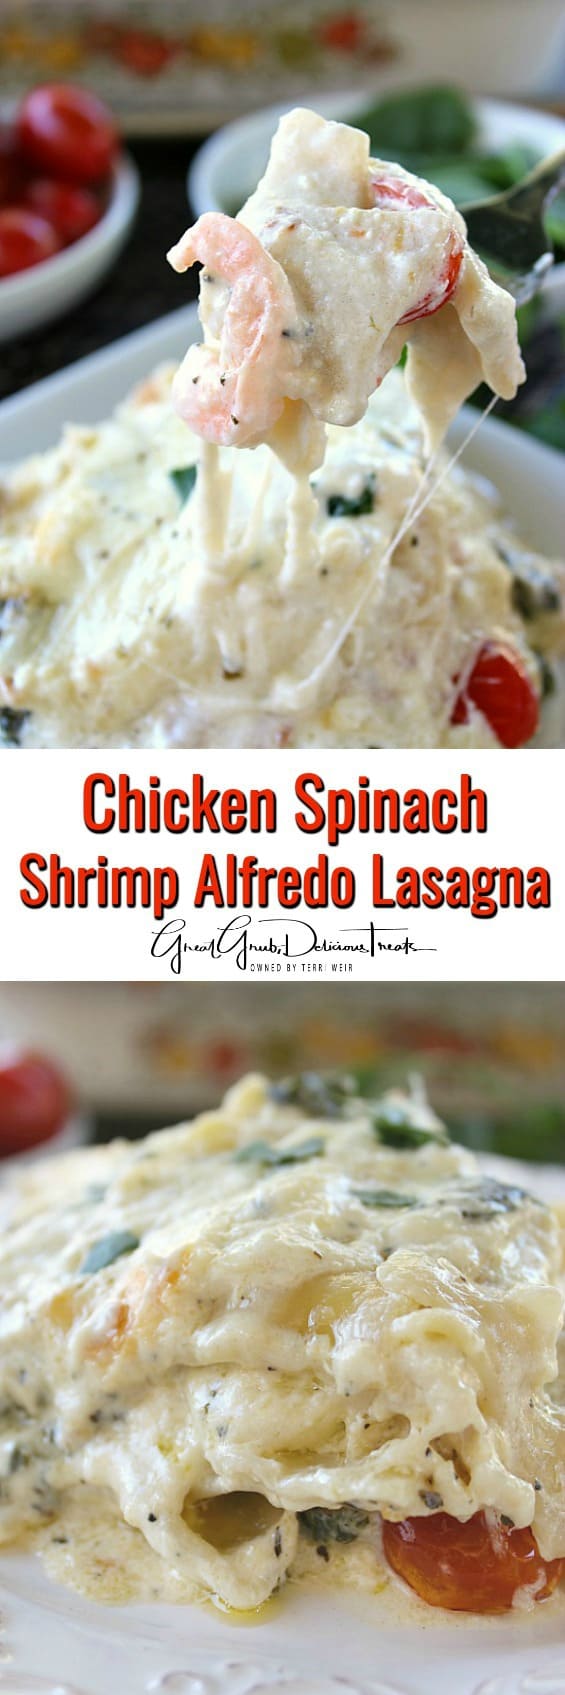 Chicken Spinach Shrimp Alfredo Lasagna